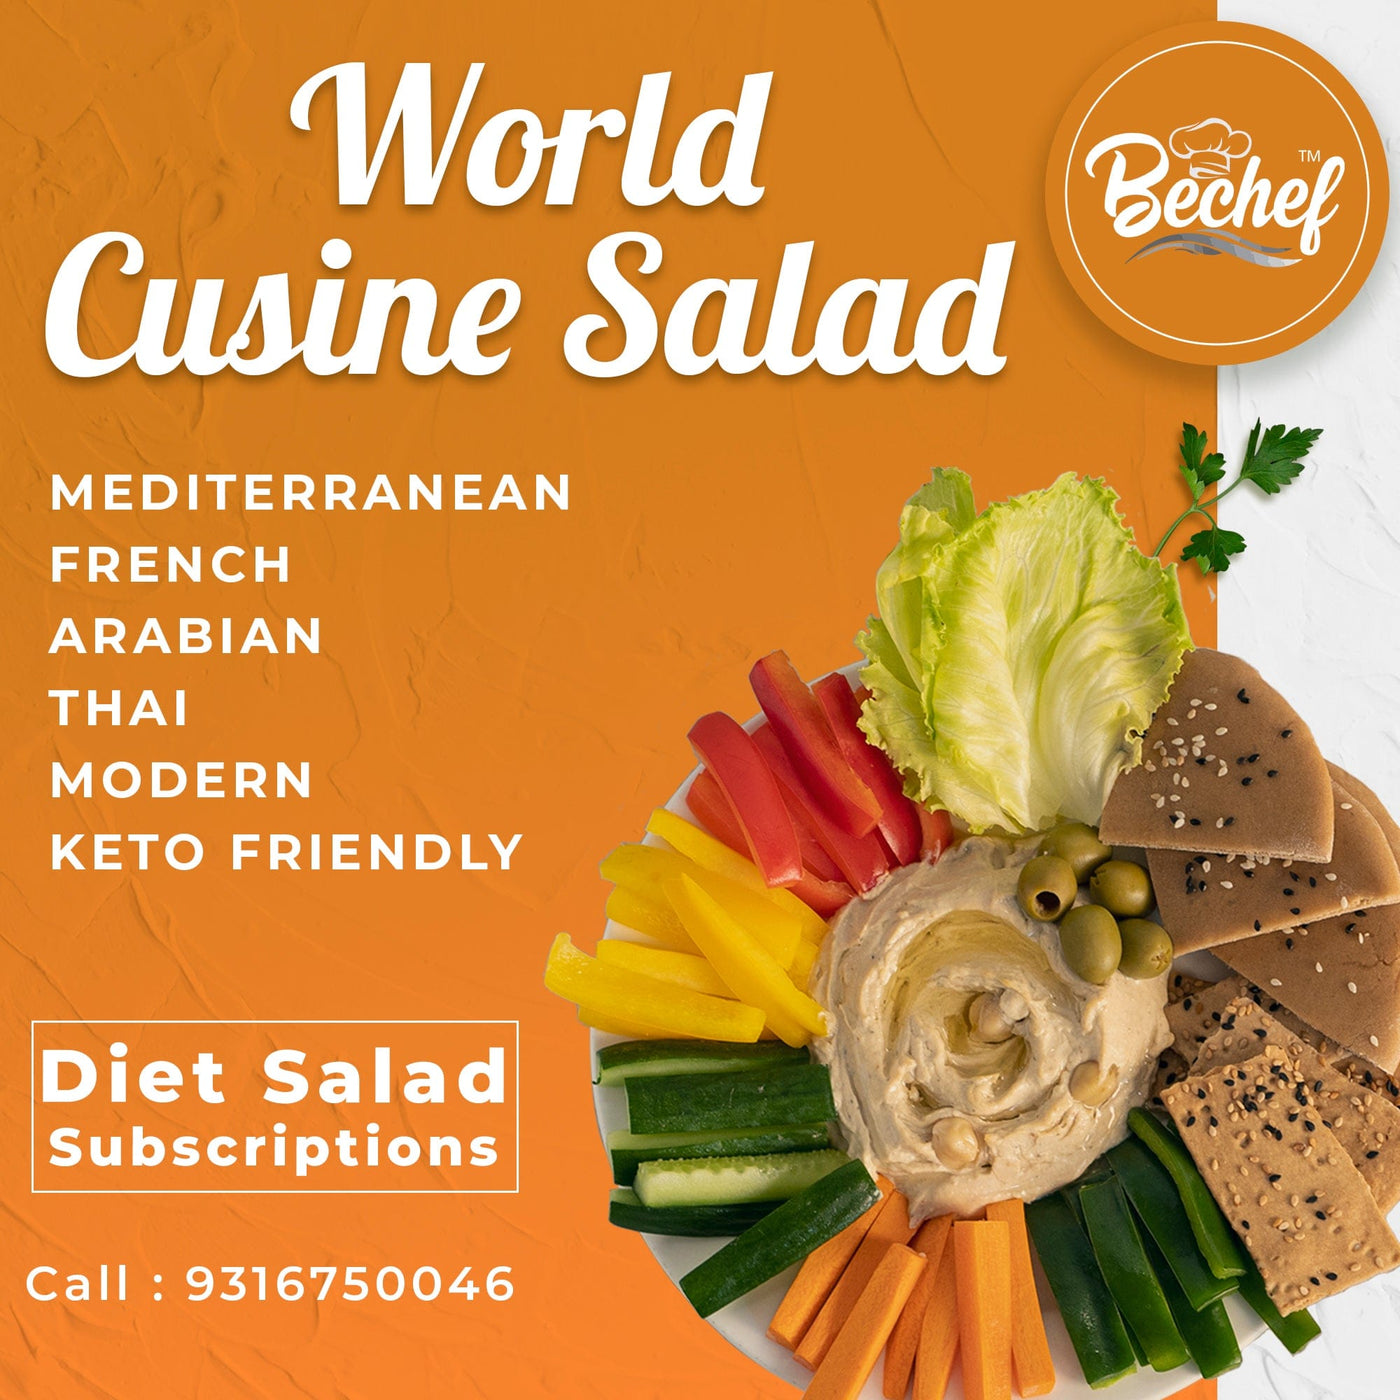 Vegan Salad Bowl Subscription Plan - Bechef - Gourmet Pantry Essentials